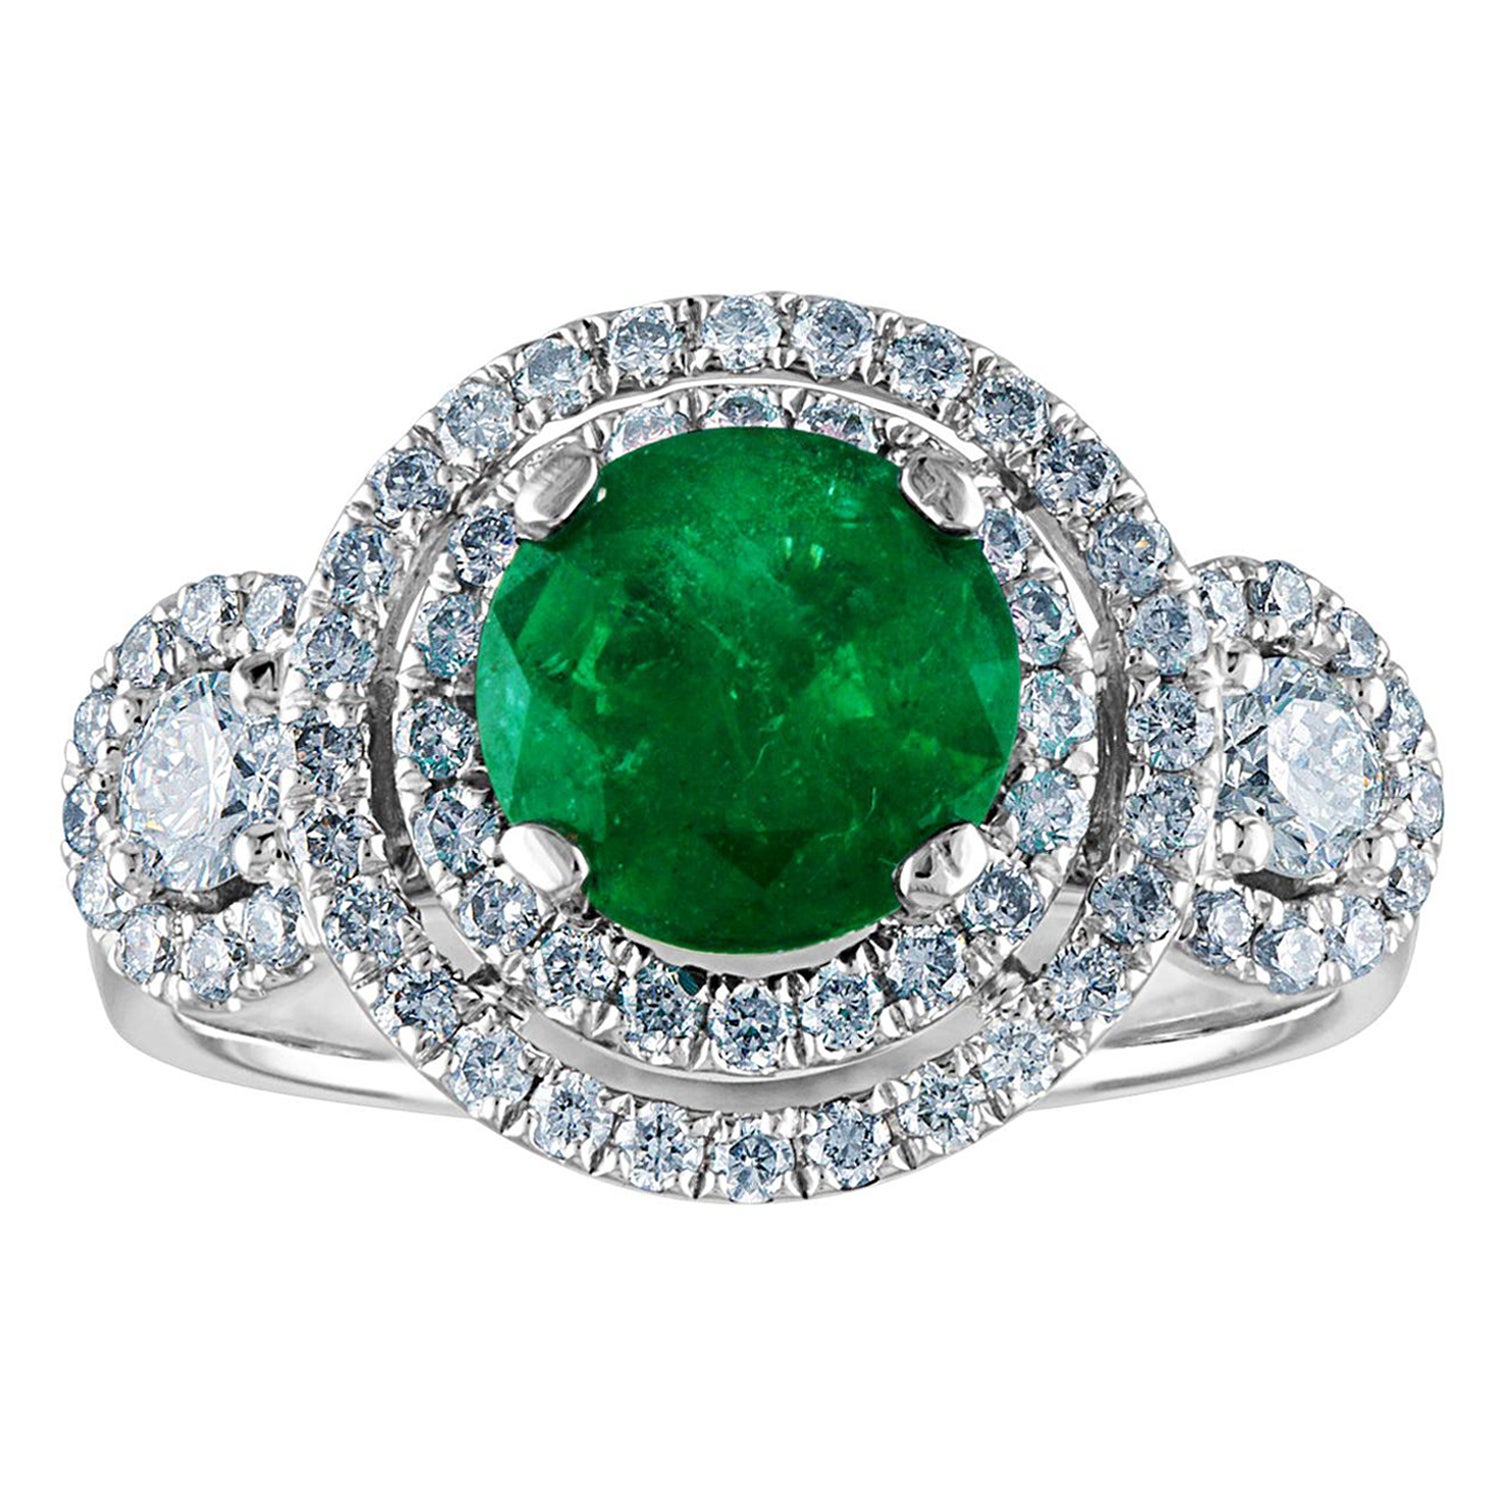 AGL Certified 1.51 Carat Round Emerald Diamond Gold Ring